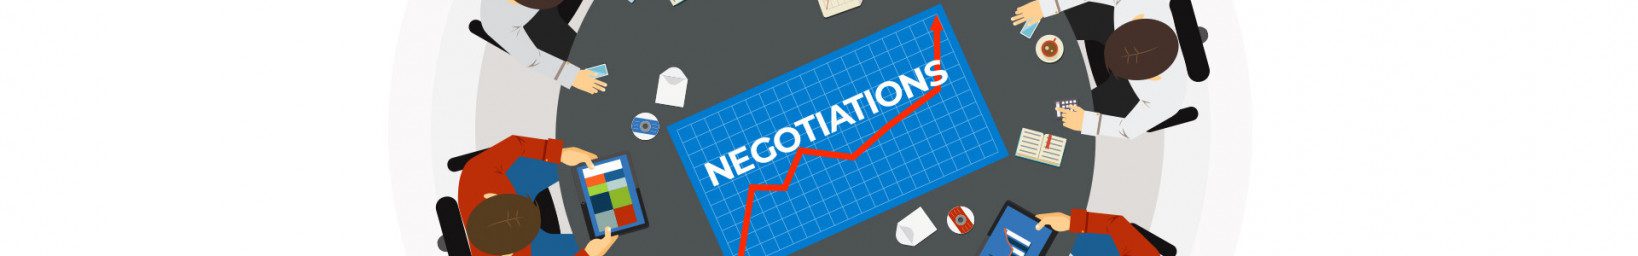 Negotiation Skills online course